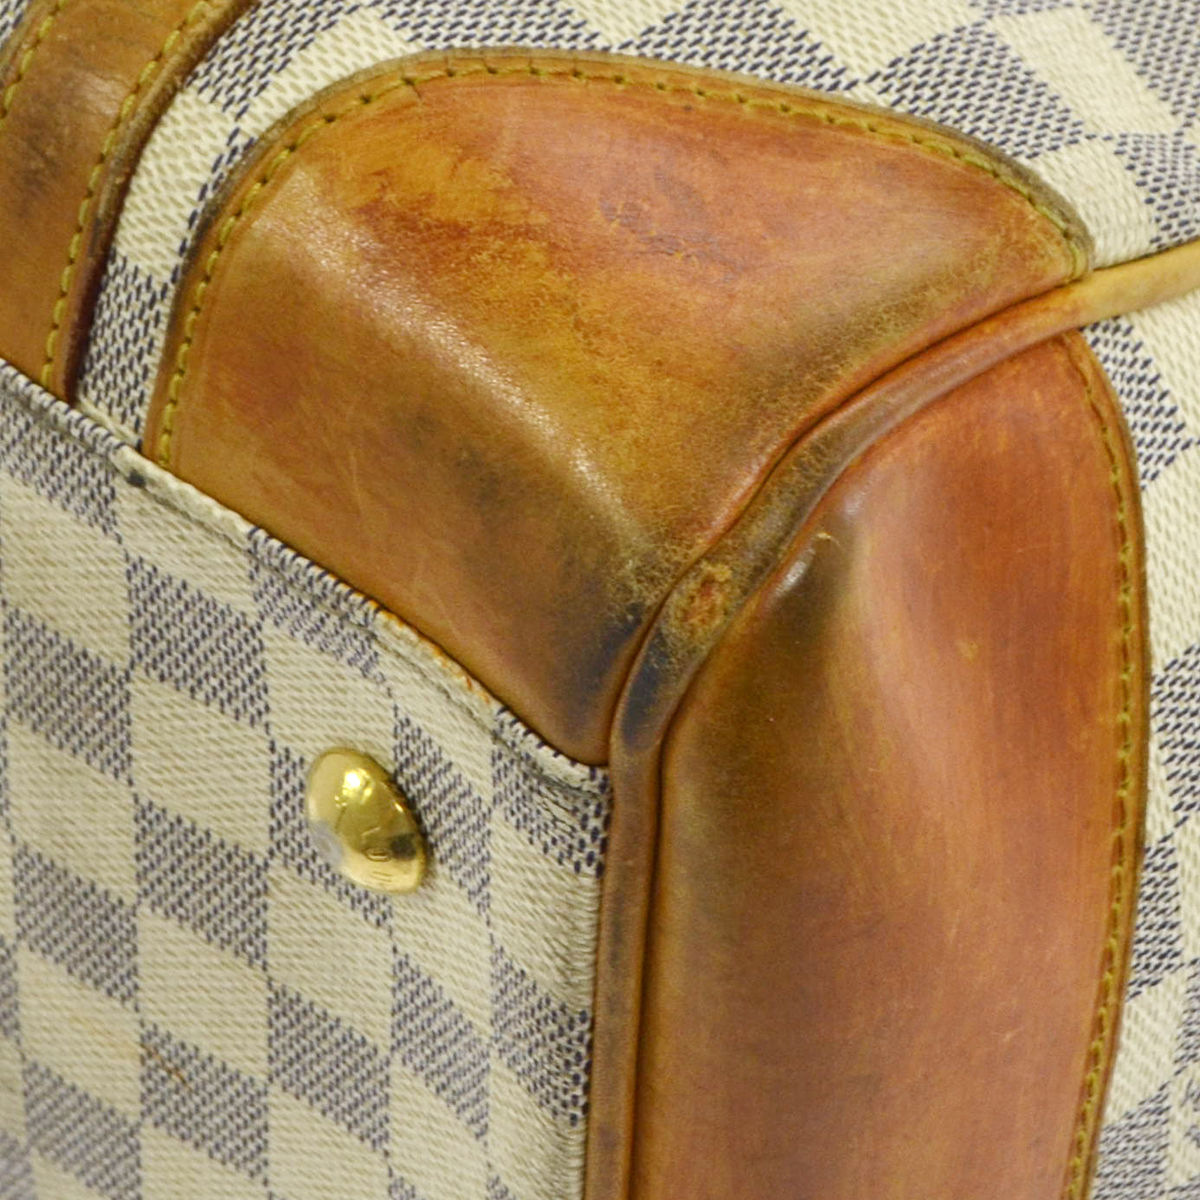 Louis Vuitton Vachetta leather trim -nhow to fix the little tear?